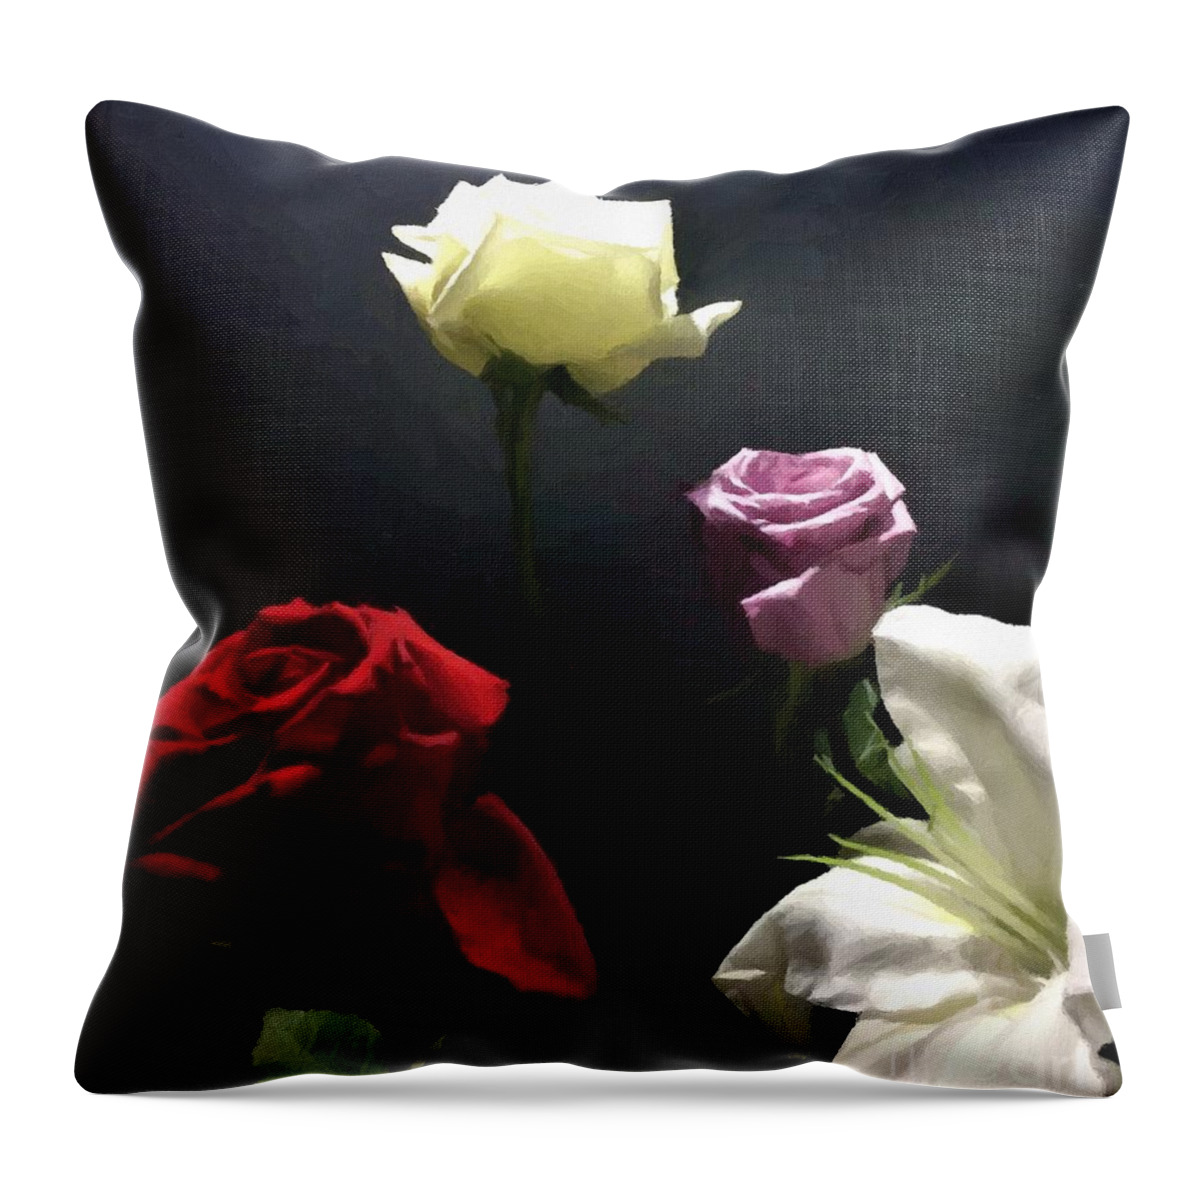 Digital Artwork Throw Pillow featuring the digital art Digital Painting Artwork Floral Bouquet by Delynn Addams